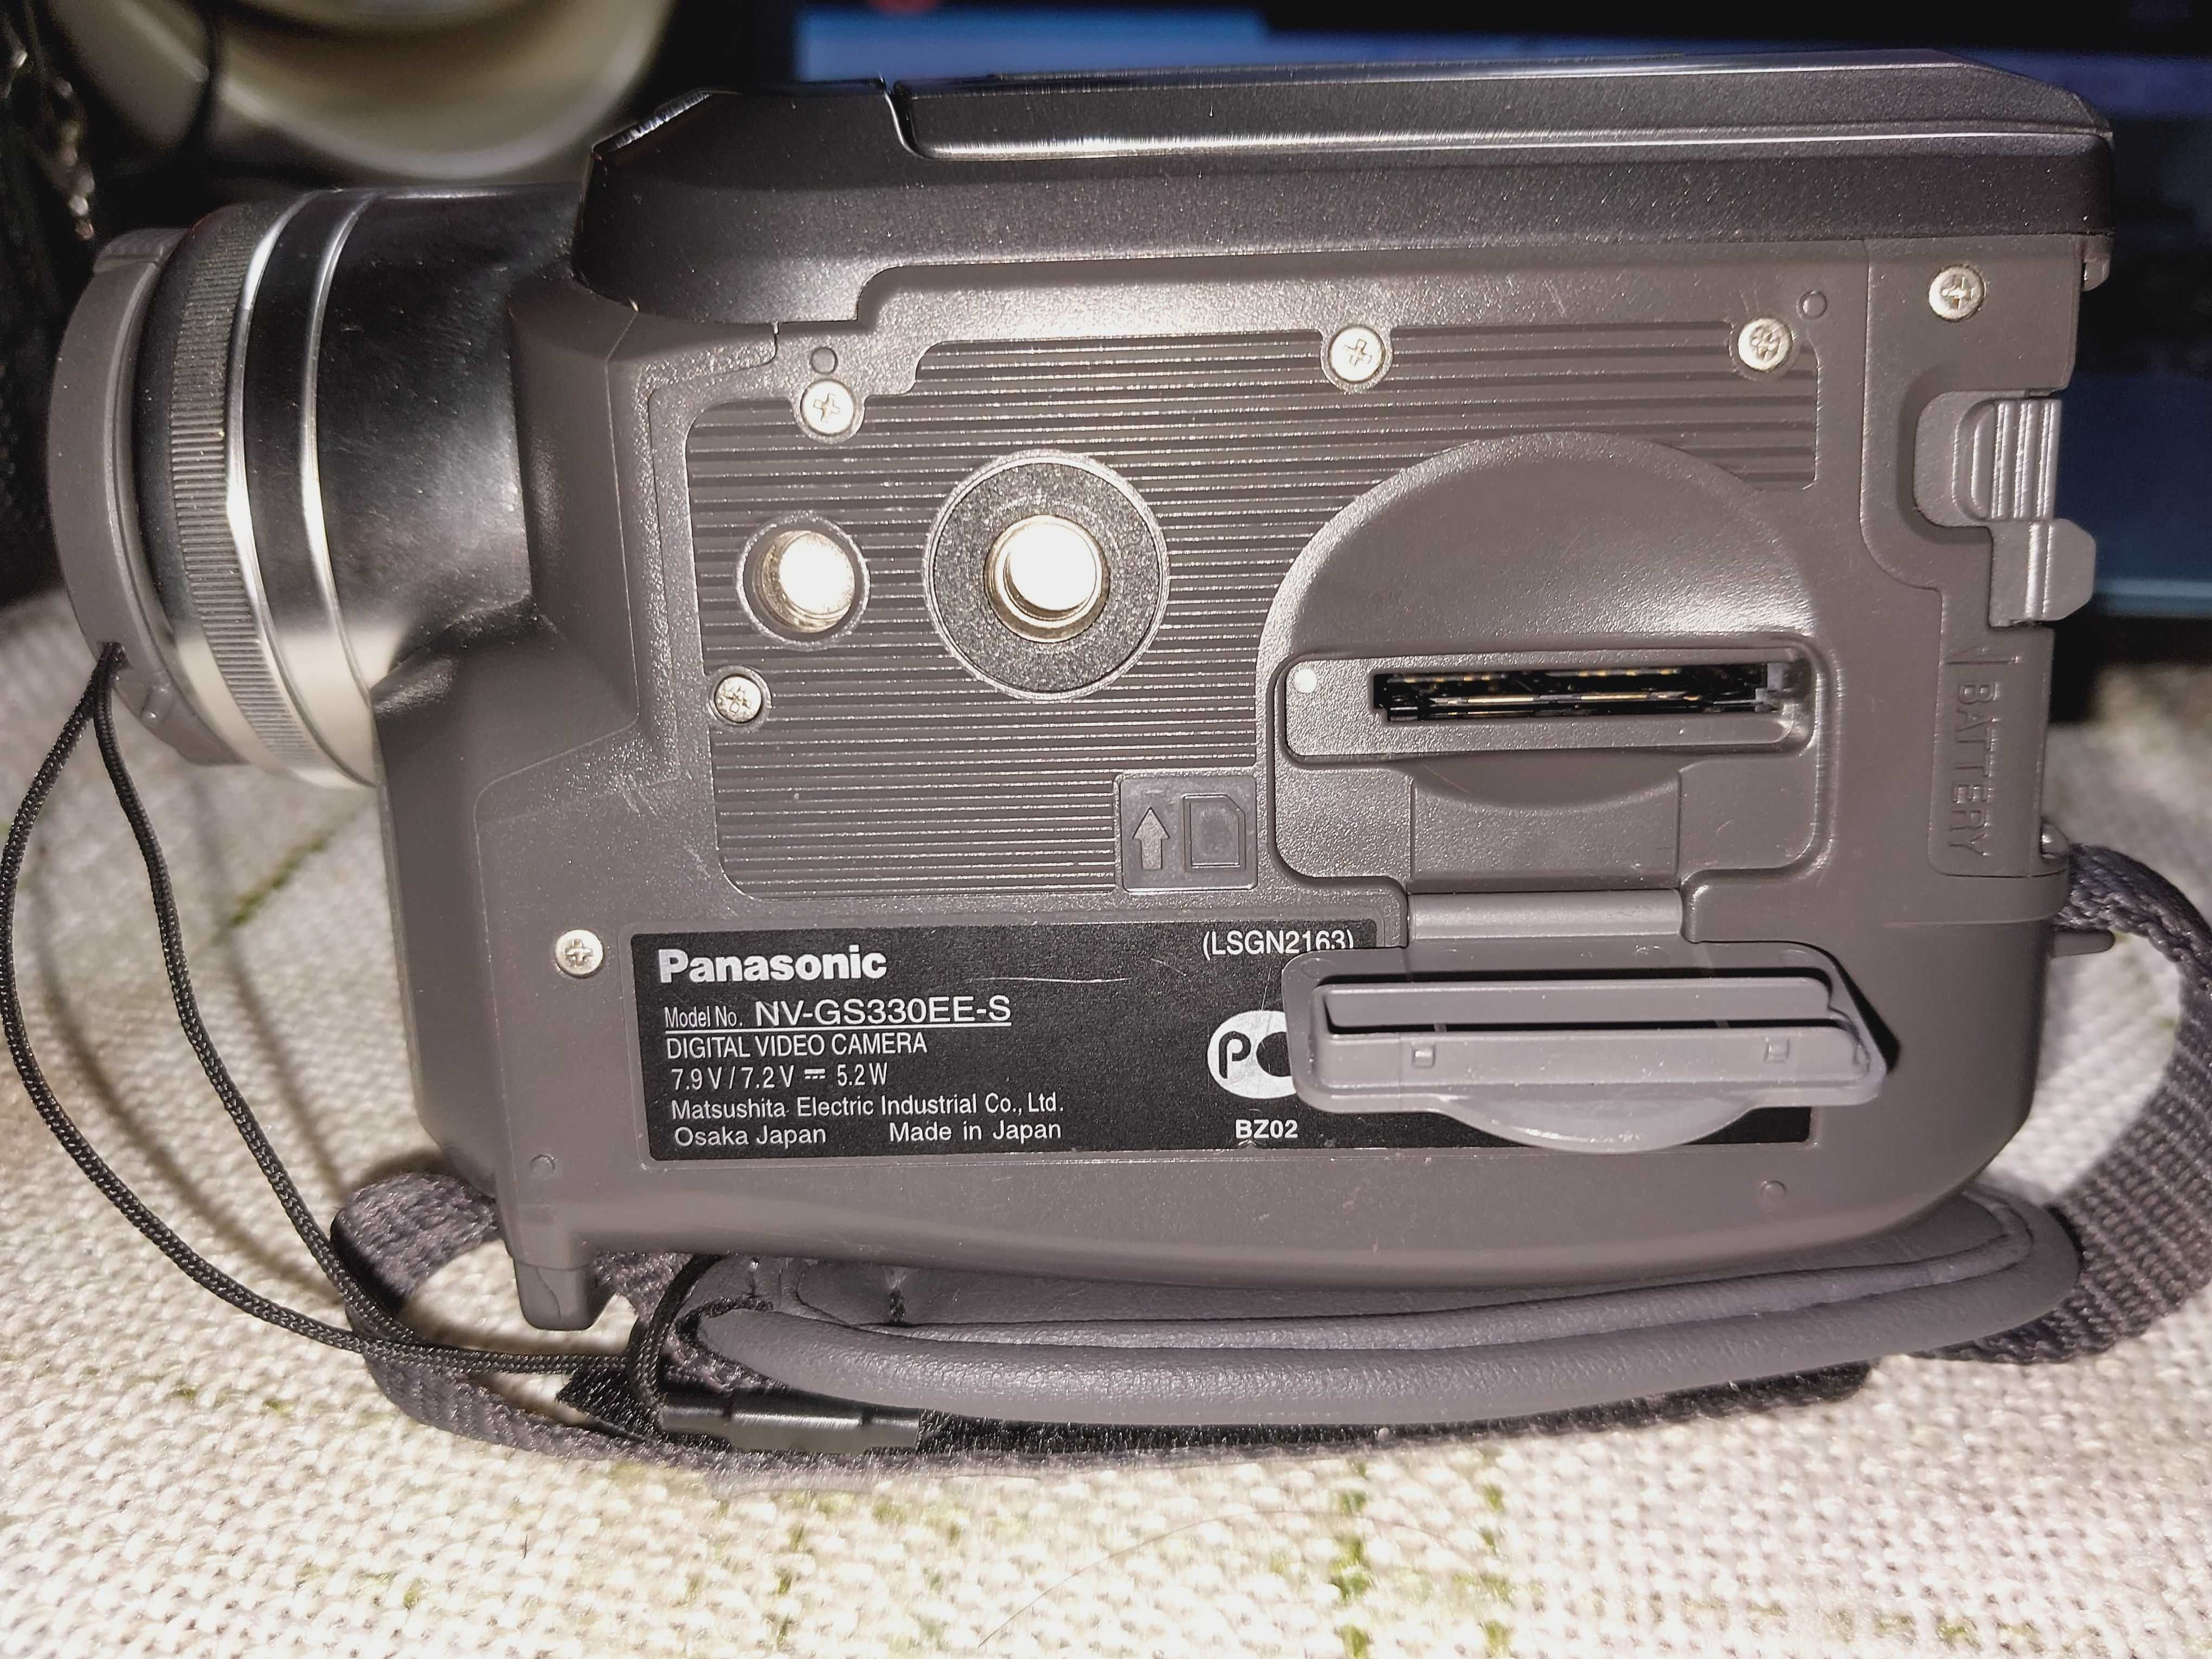 Digital Video Camera Panasonic NV-GS330EE